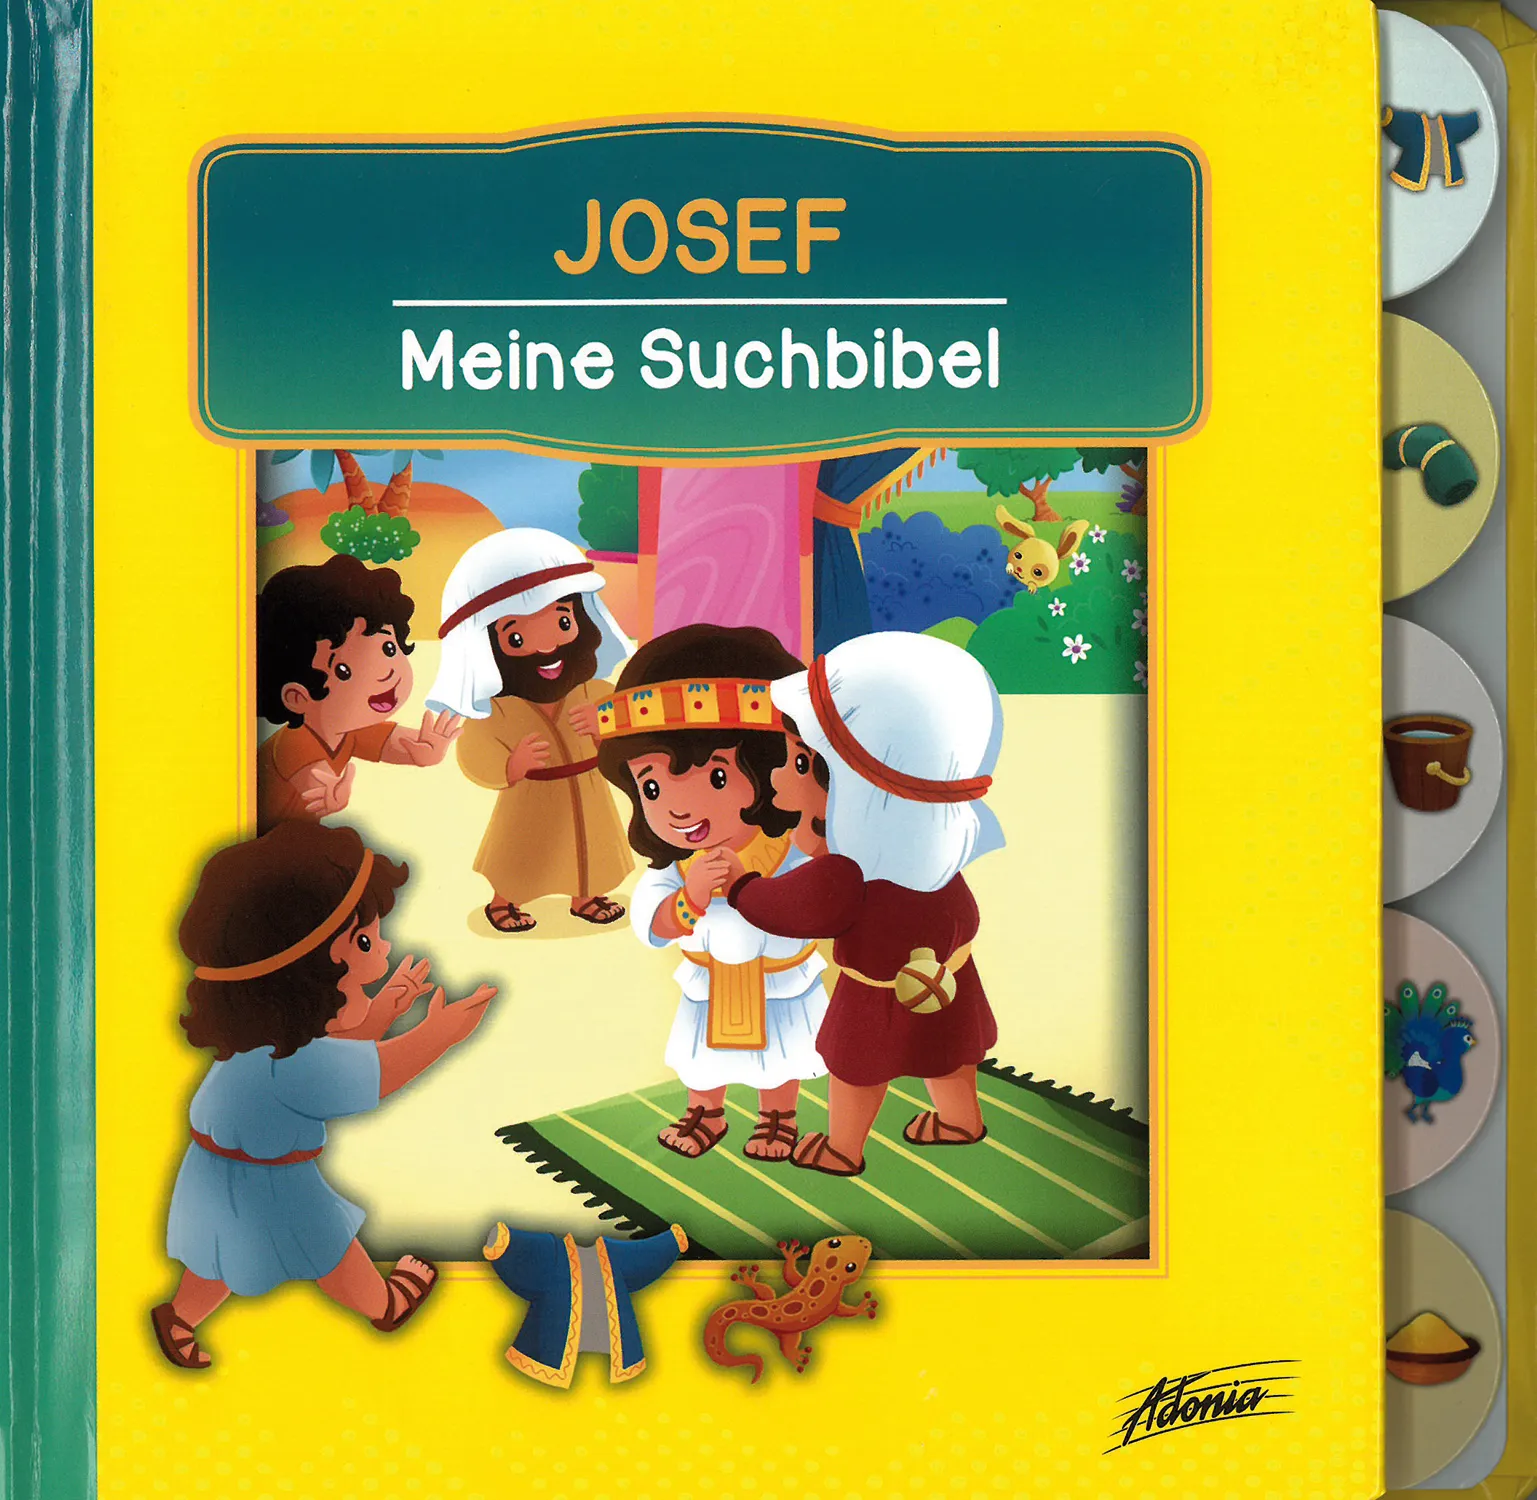 Josef - Meine Suchbibel